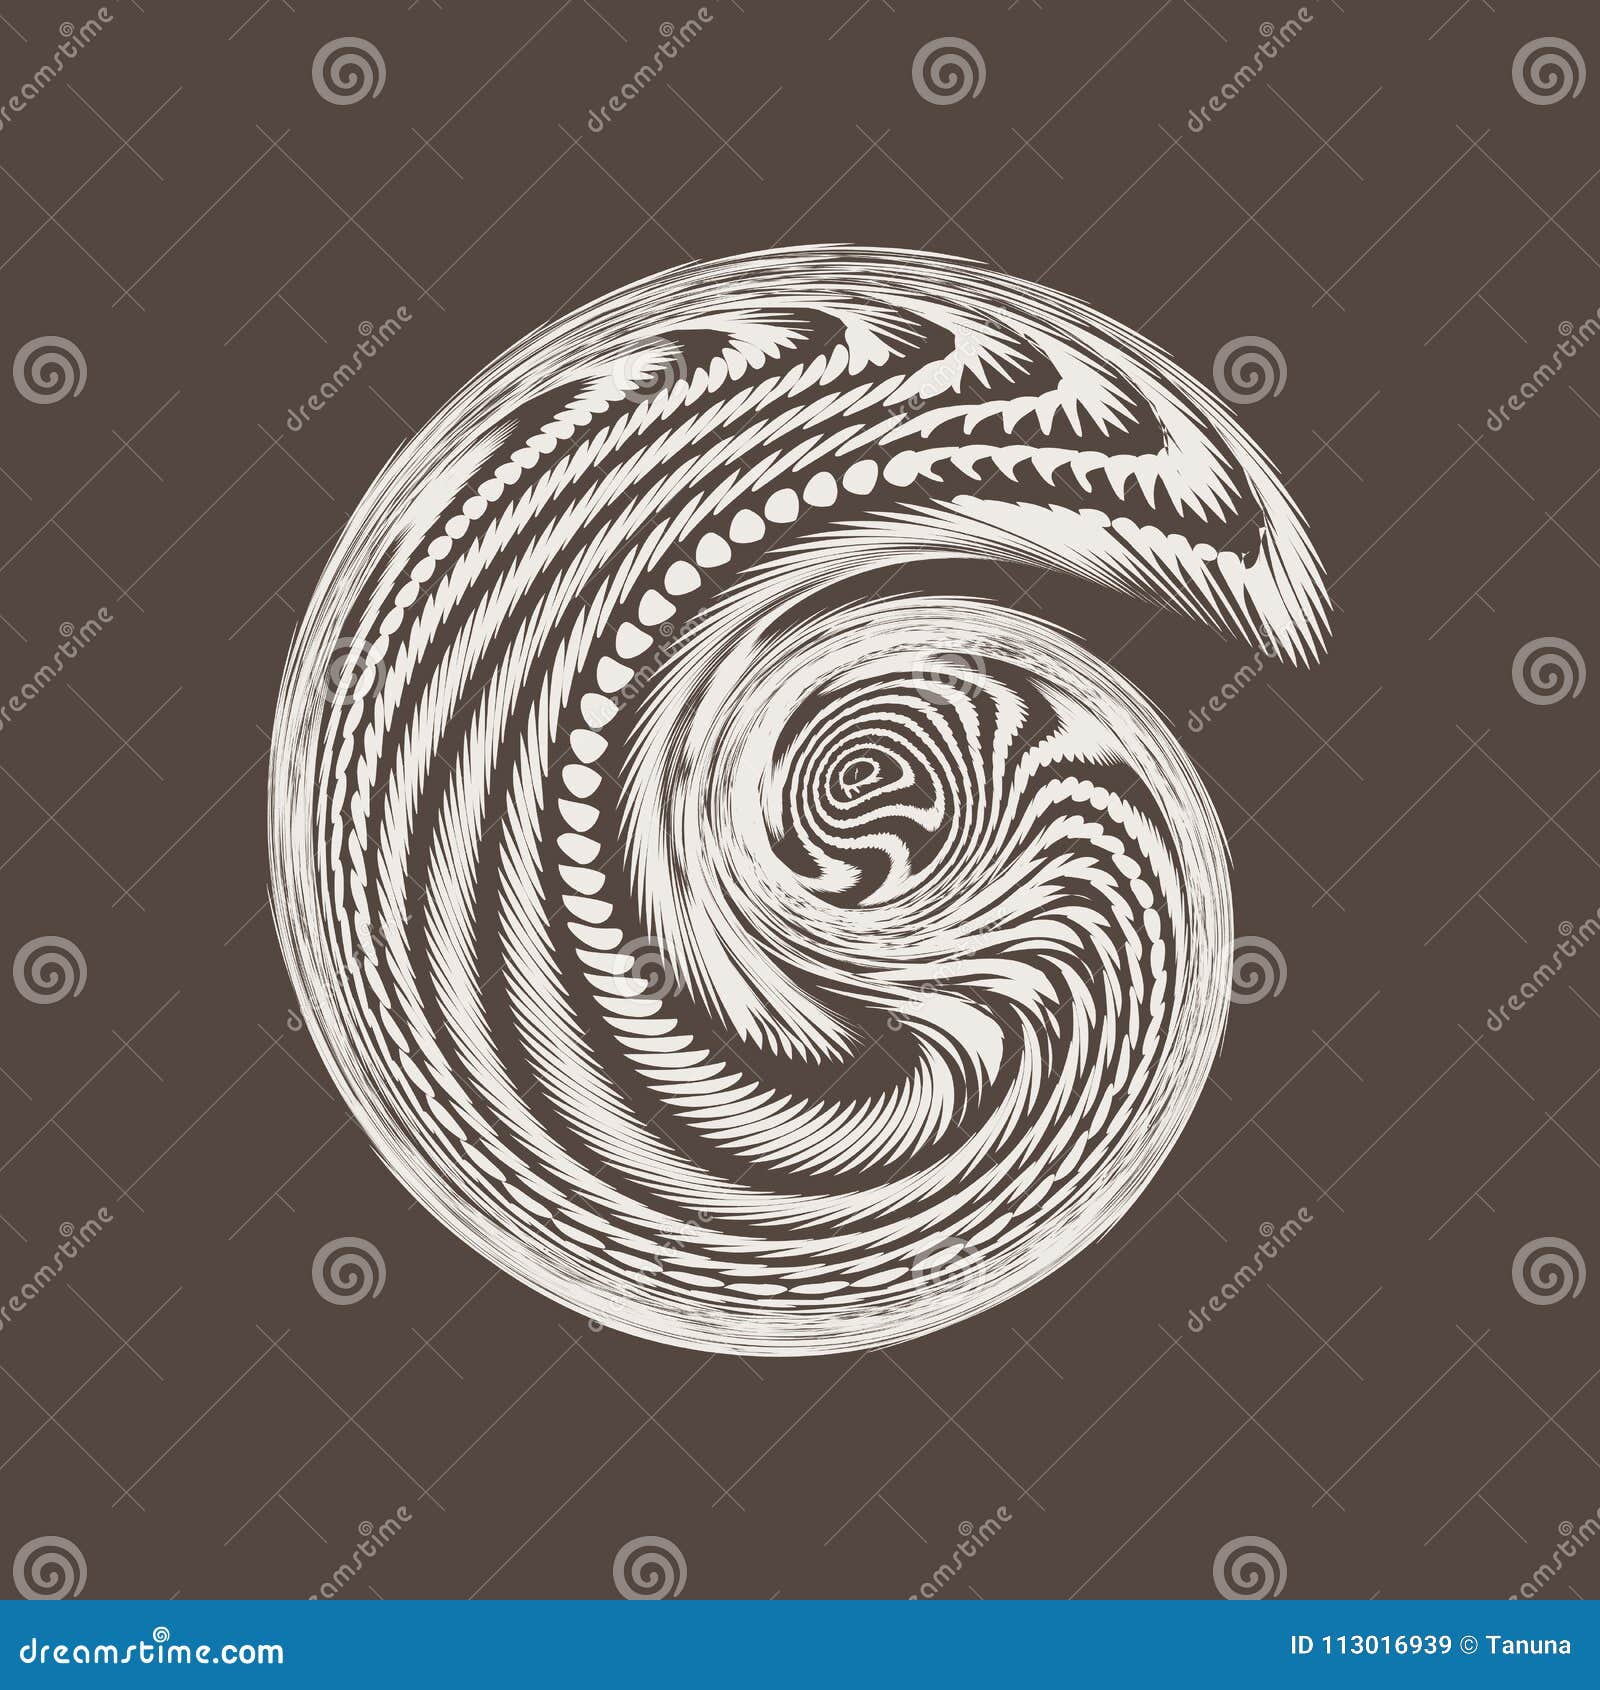  abstrackt spiral background